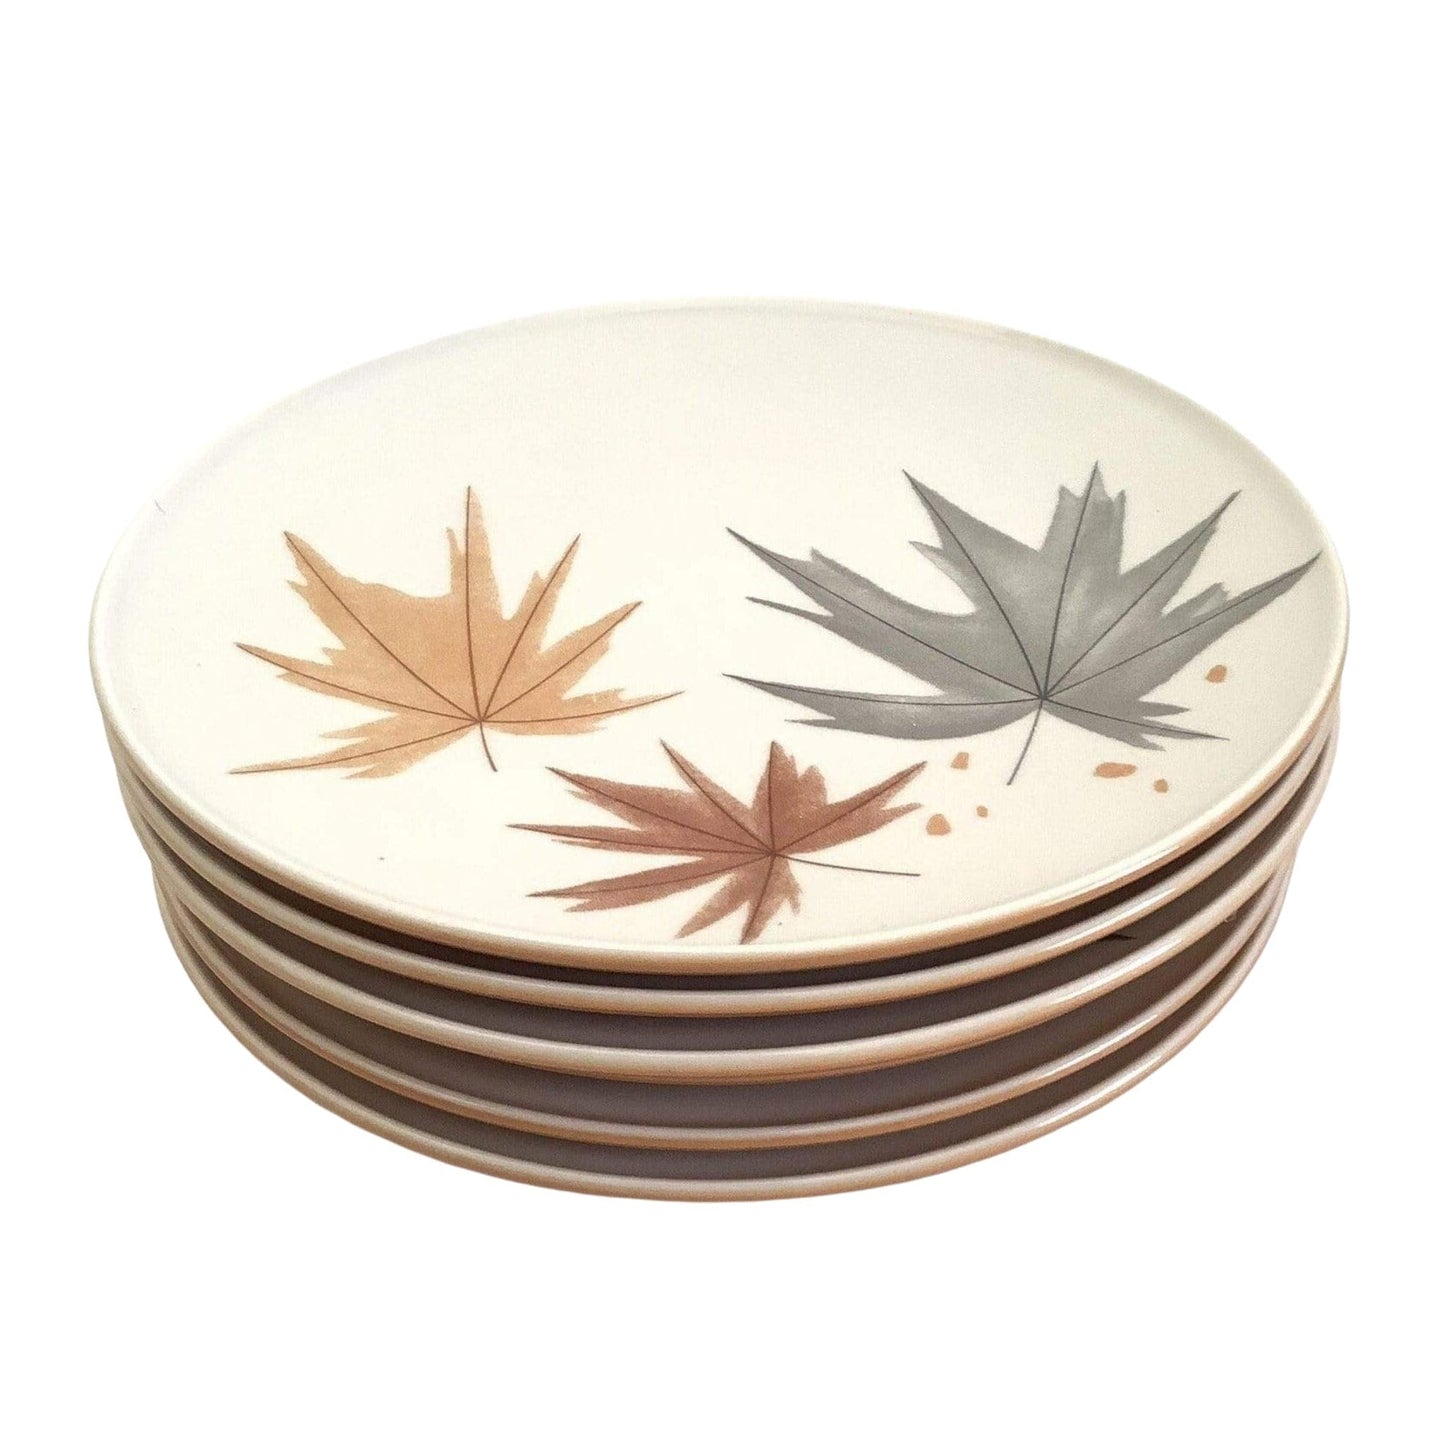 Ben Seibel Dinner Plates Ceramic / Multi / Vintage 1980s